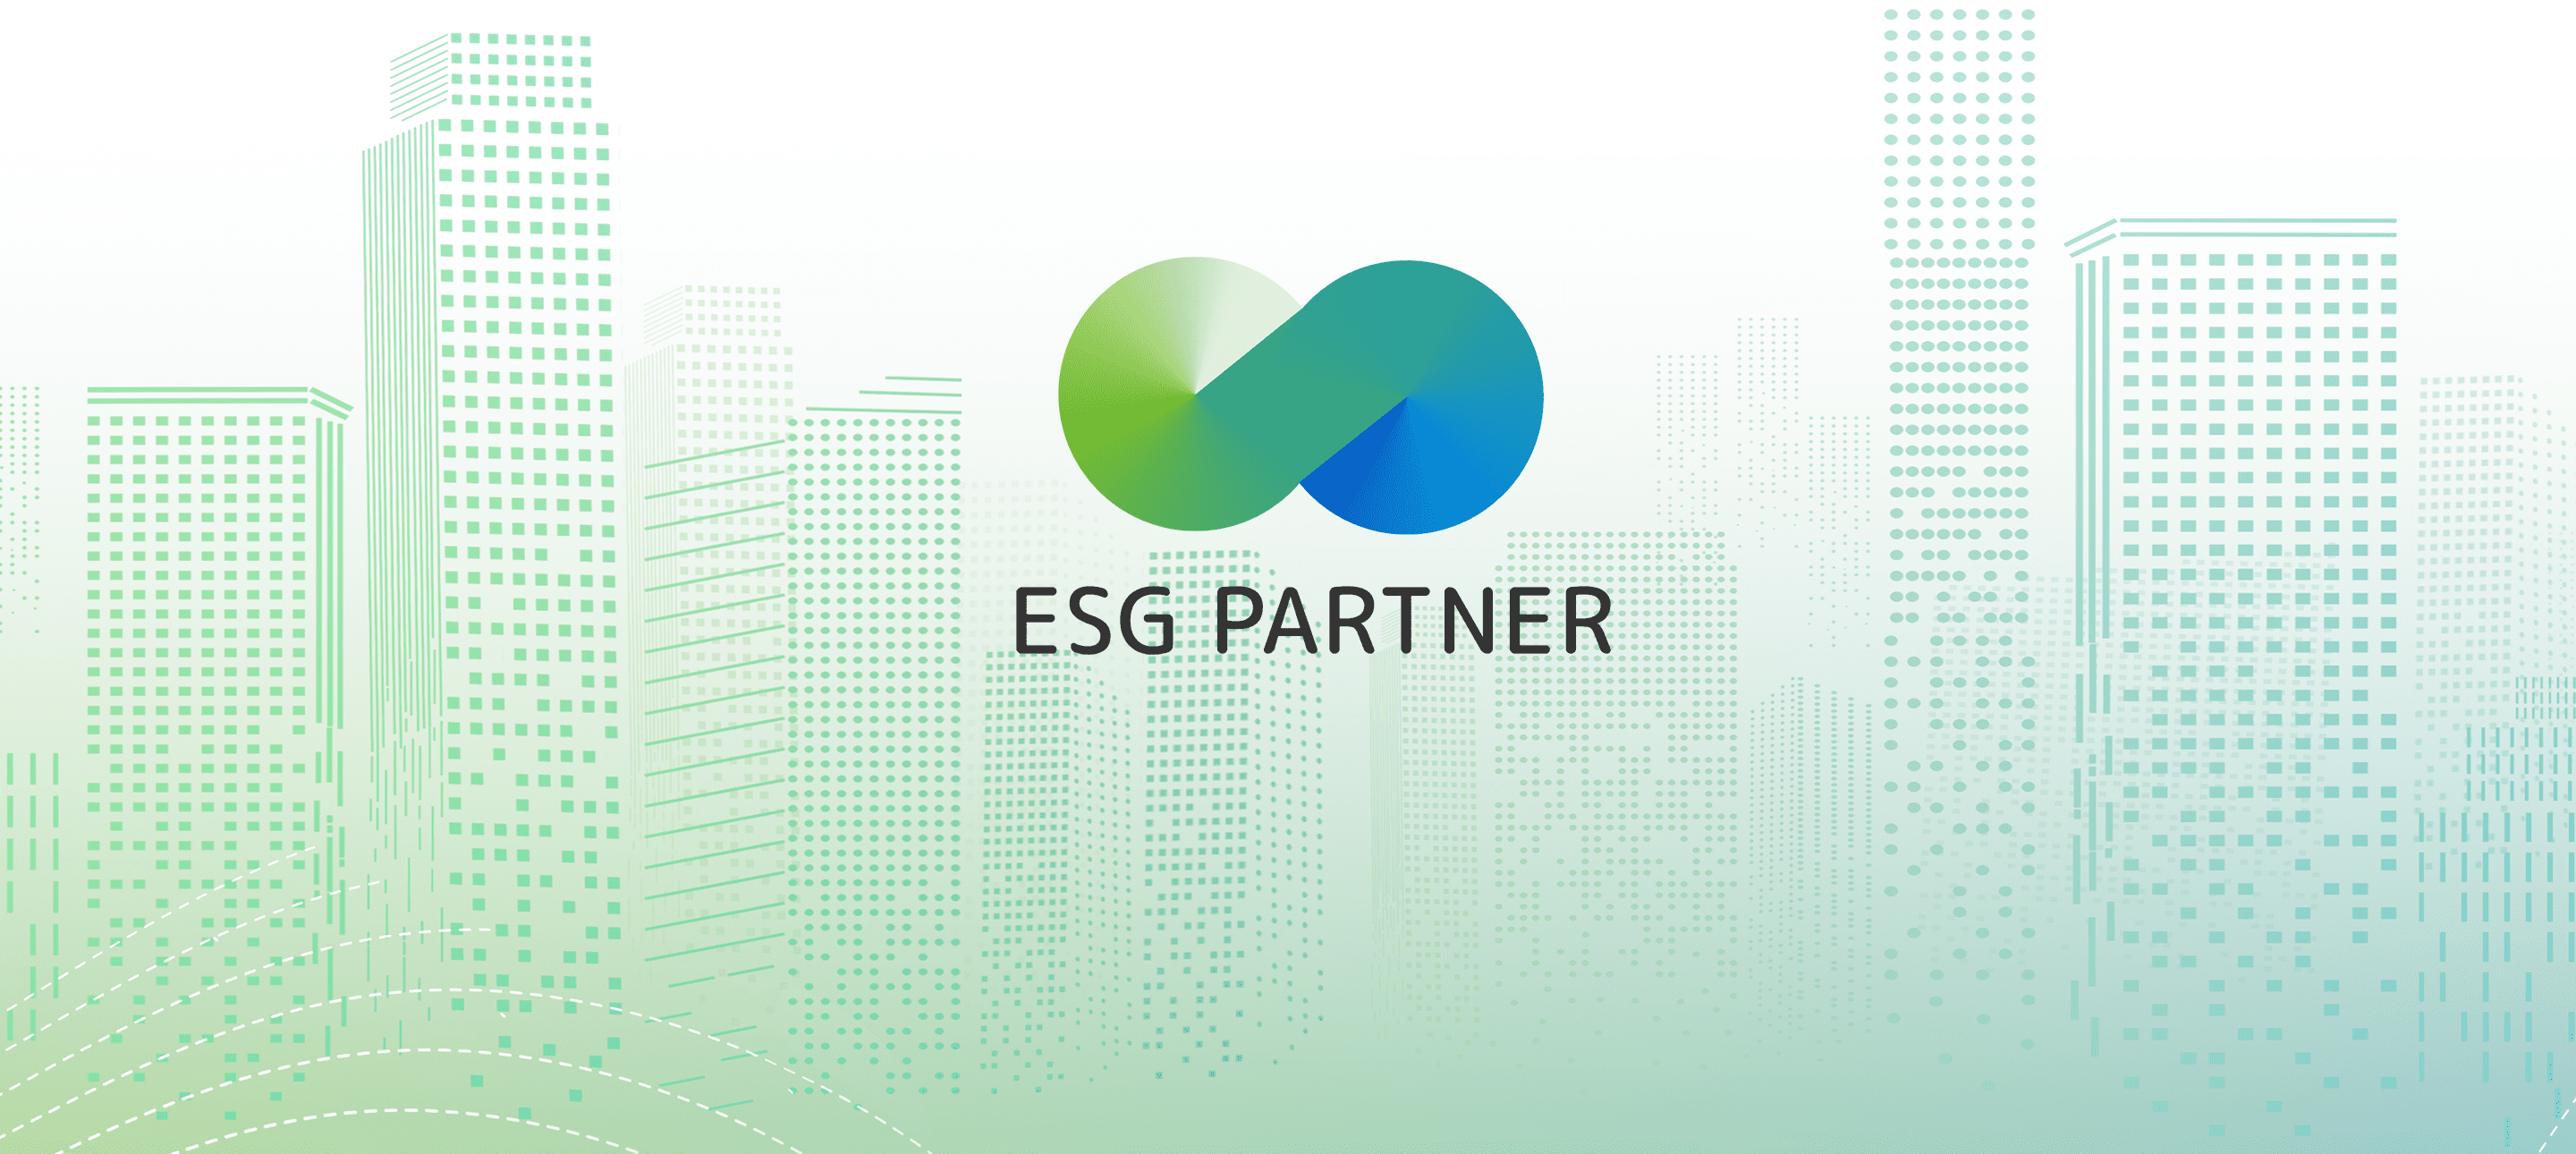 ESG PARTNER——可靠的可持续发展数字化伙伴